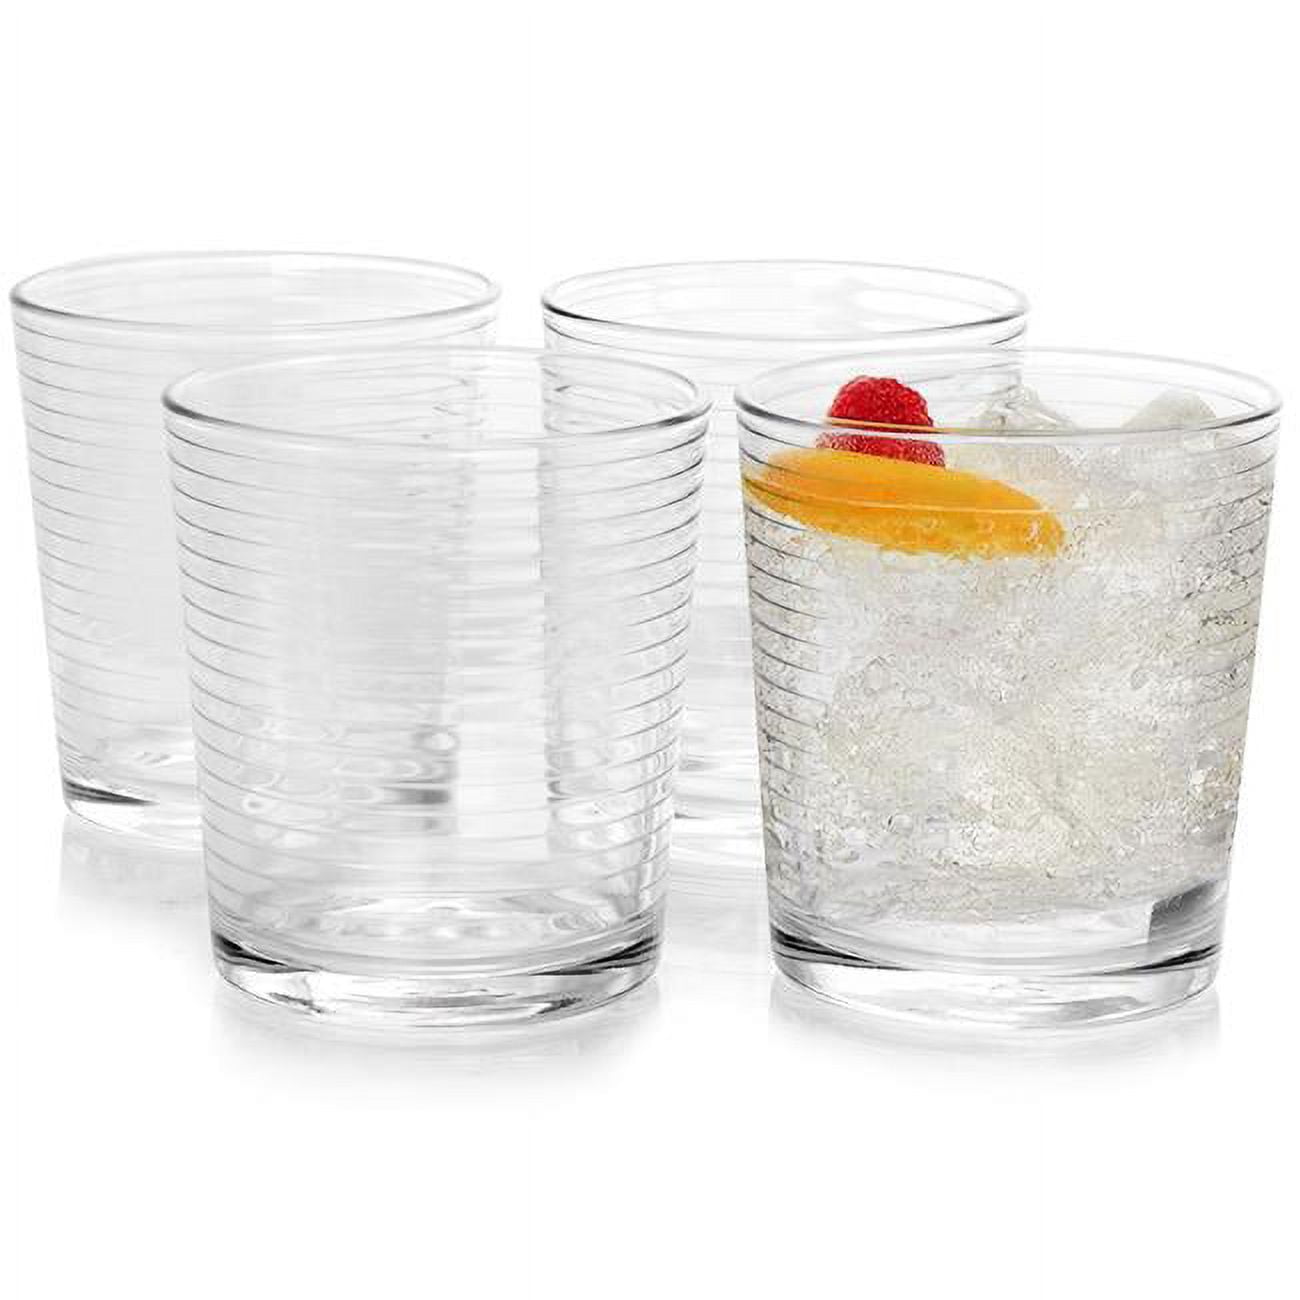 Duka 12-oz Textured Drinking Glass - 4-Piece Set, Size: One Size